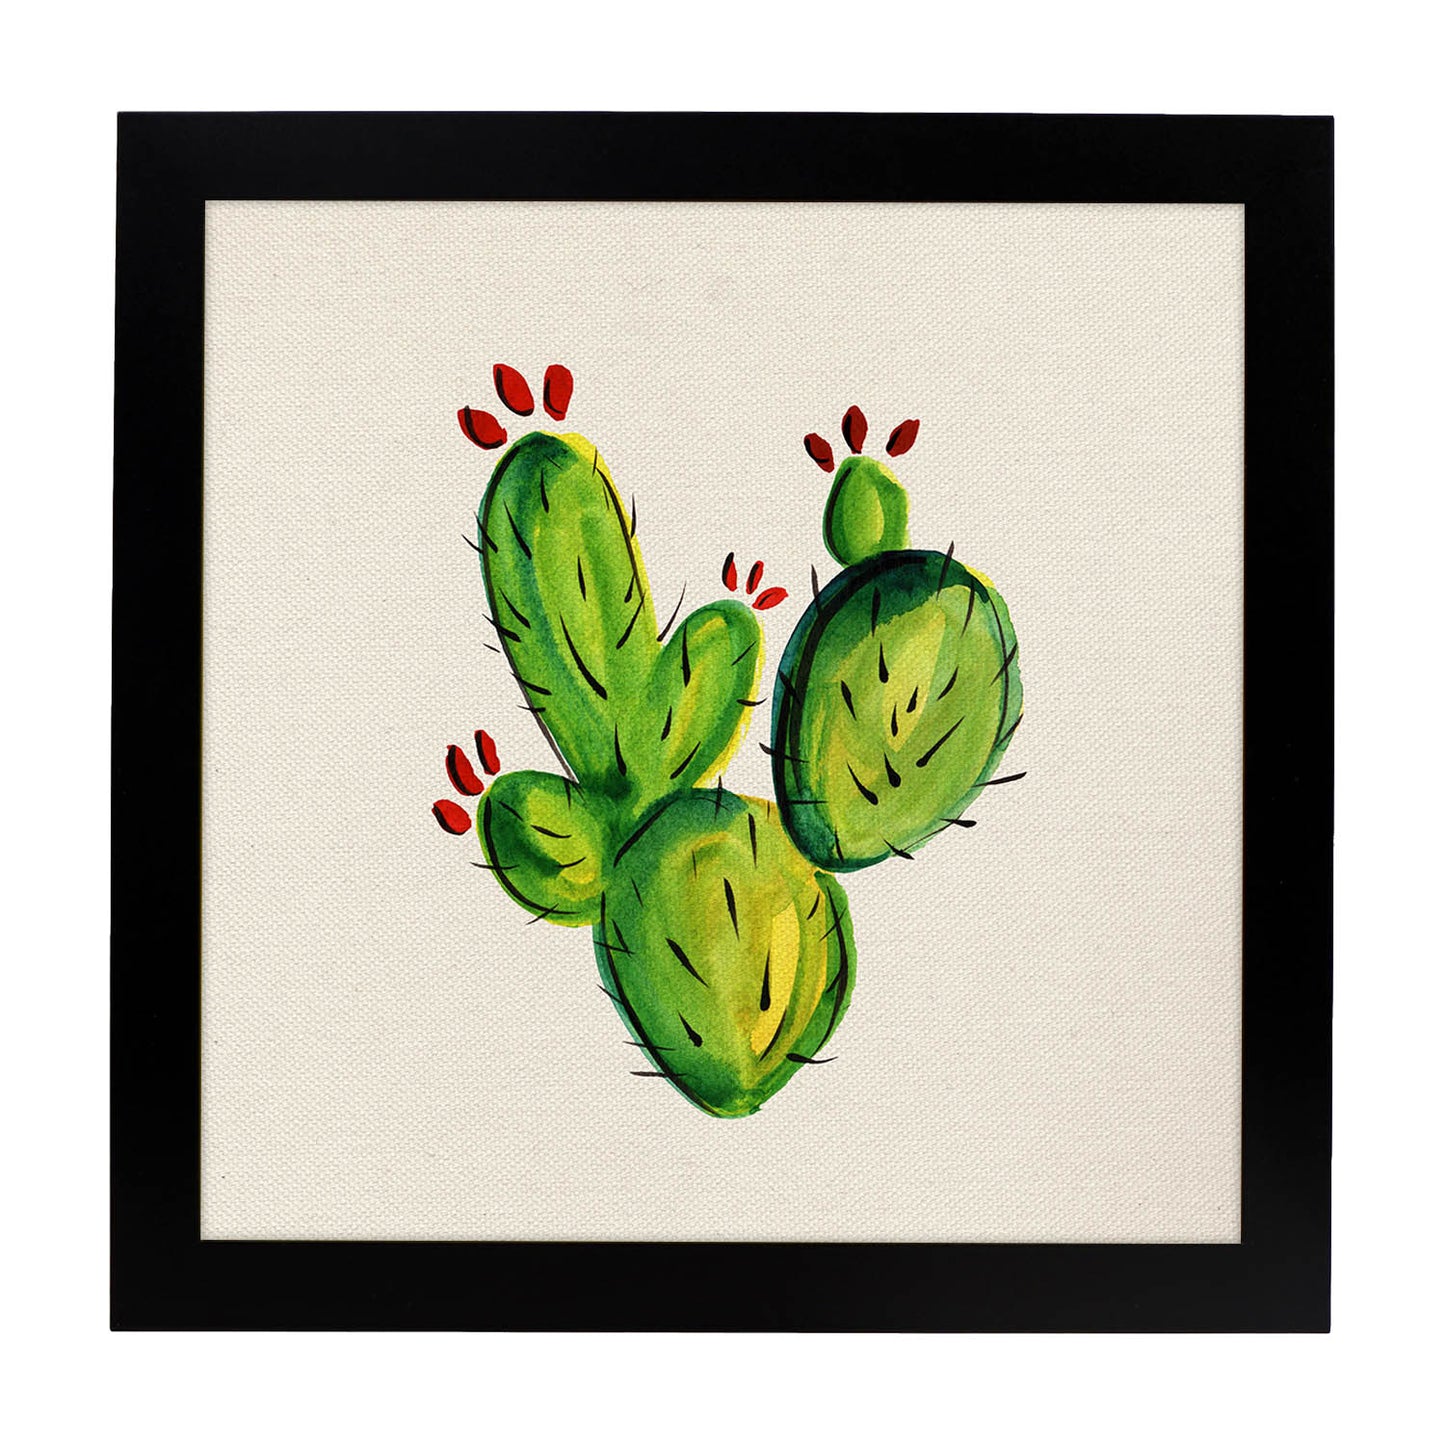 Poster de cactus dibujado. Lámina de Mírame, no me toques-Artwork-Nacnic-20x20 cm-Marco Negro-Nacnic Estudio SL